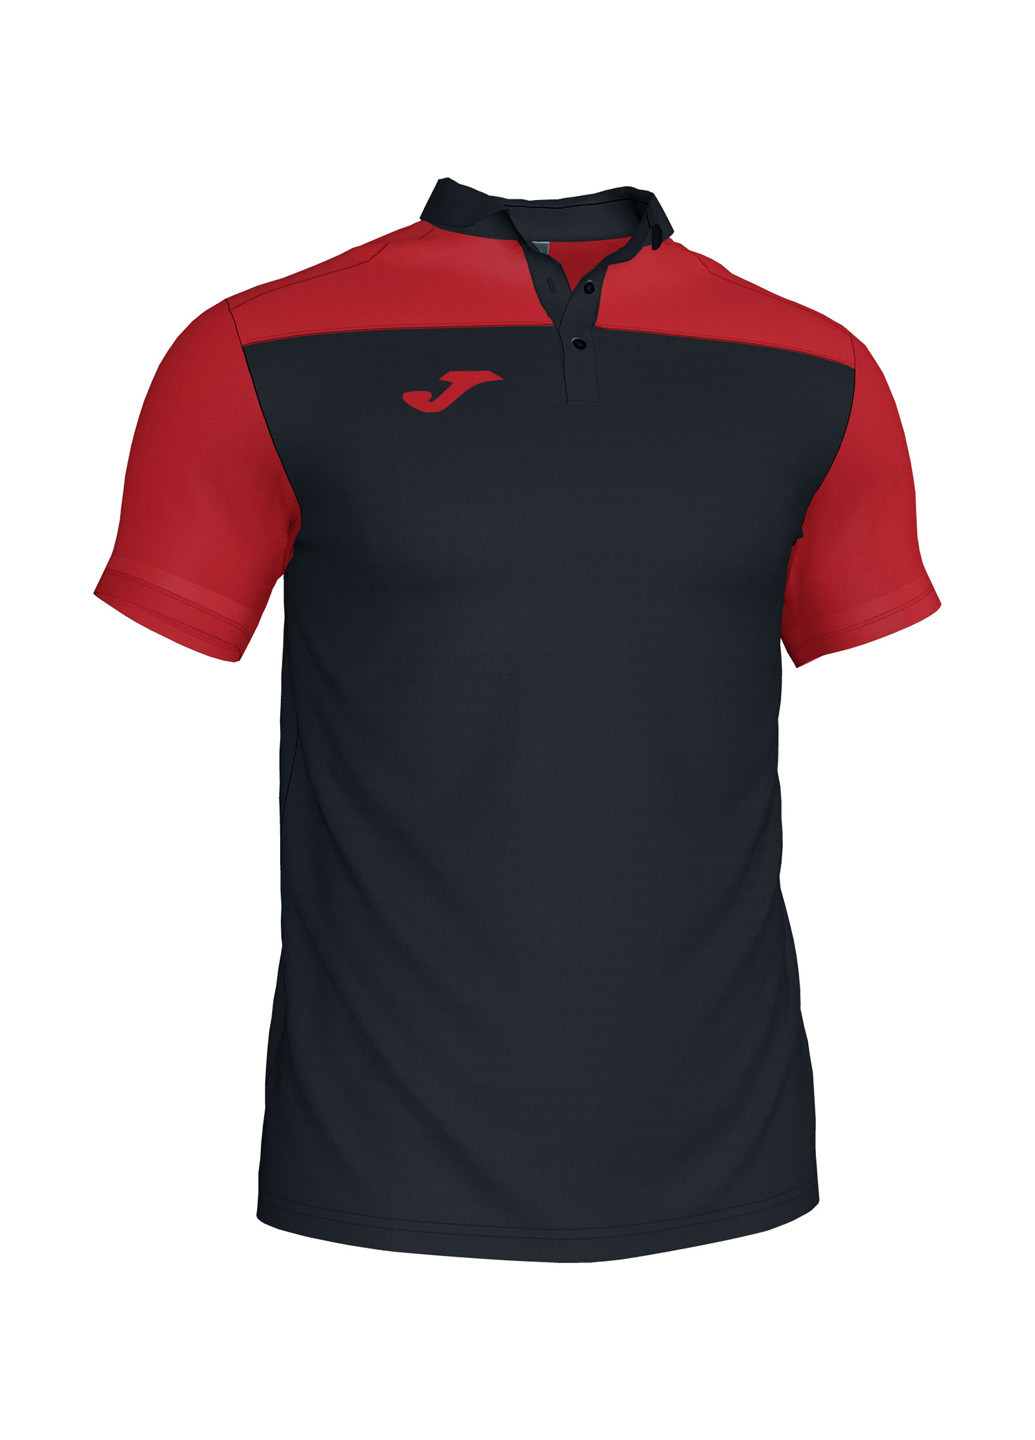 Черная футболка-поло для мужчин Joma с логотипом